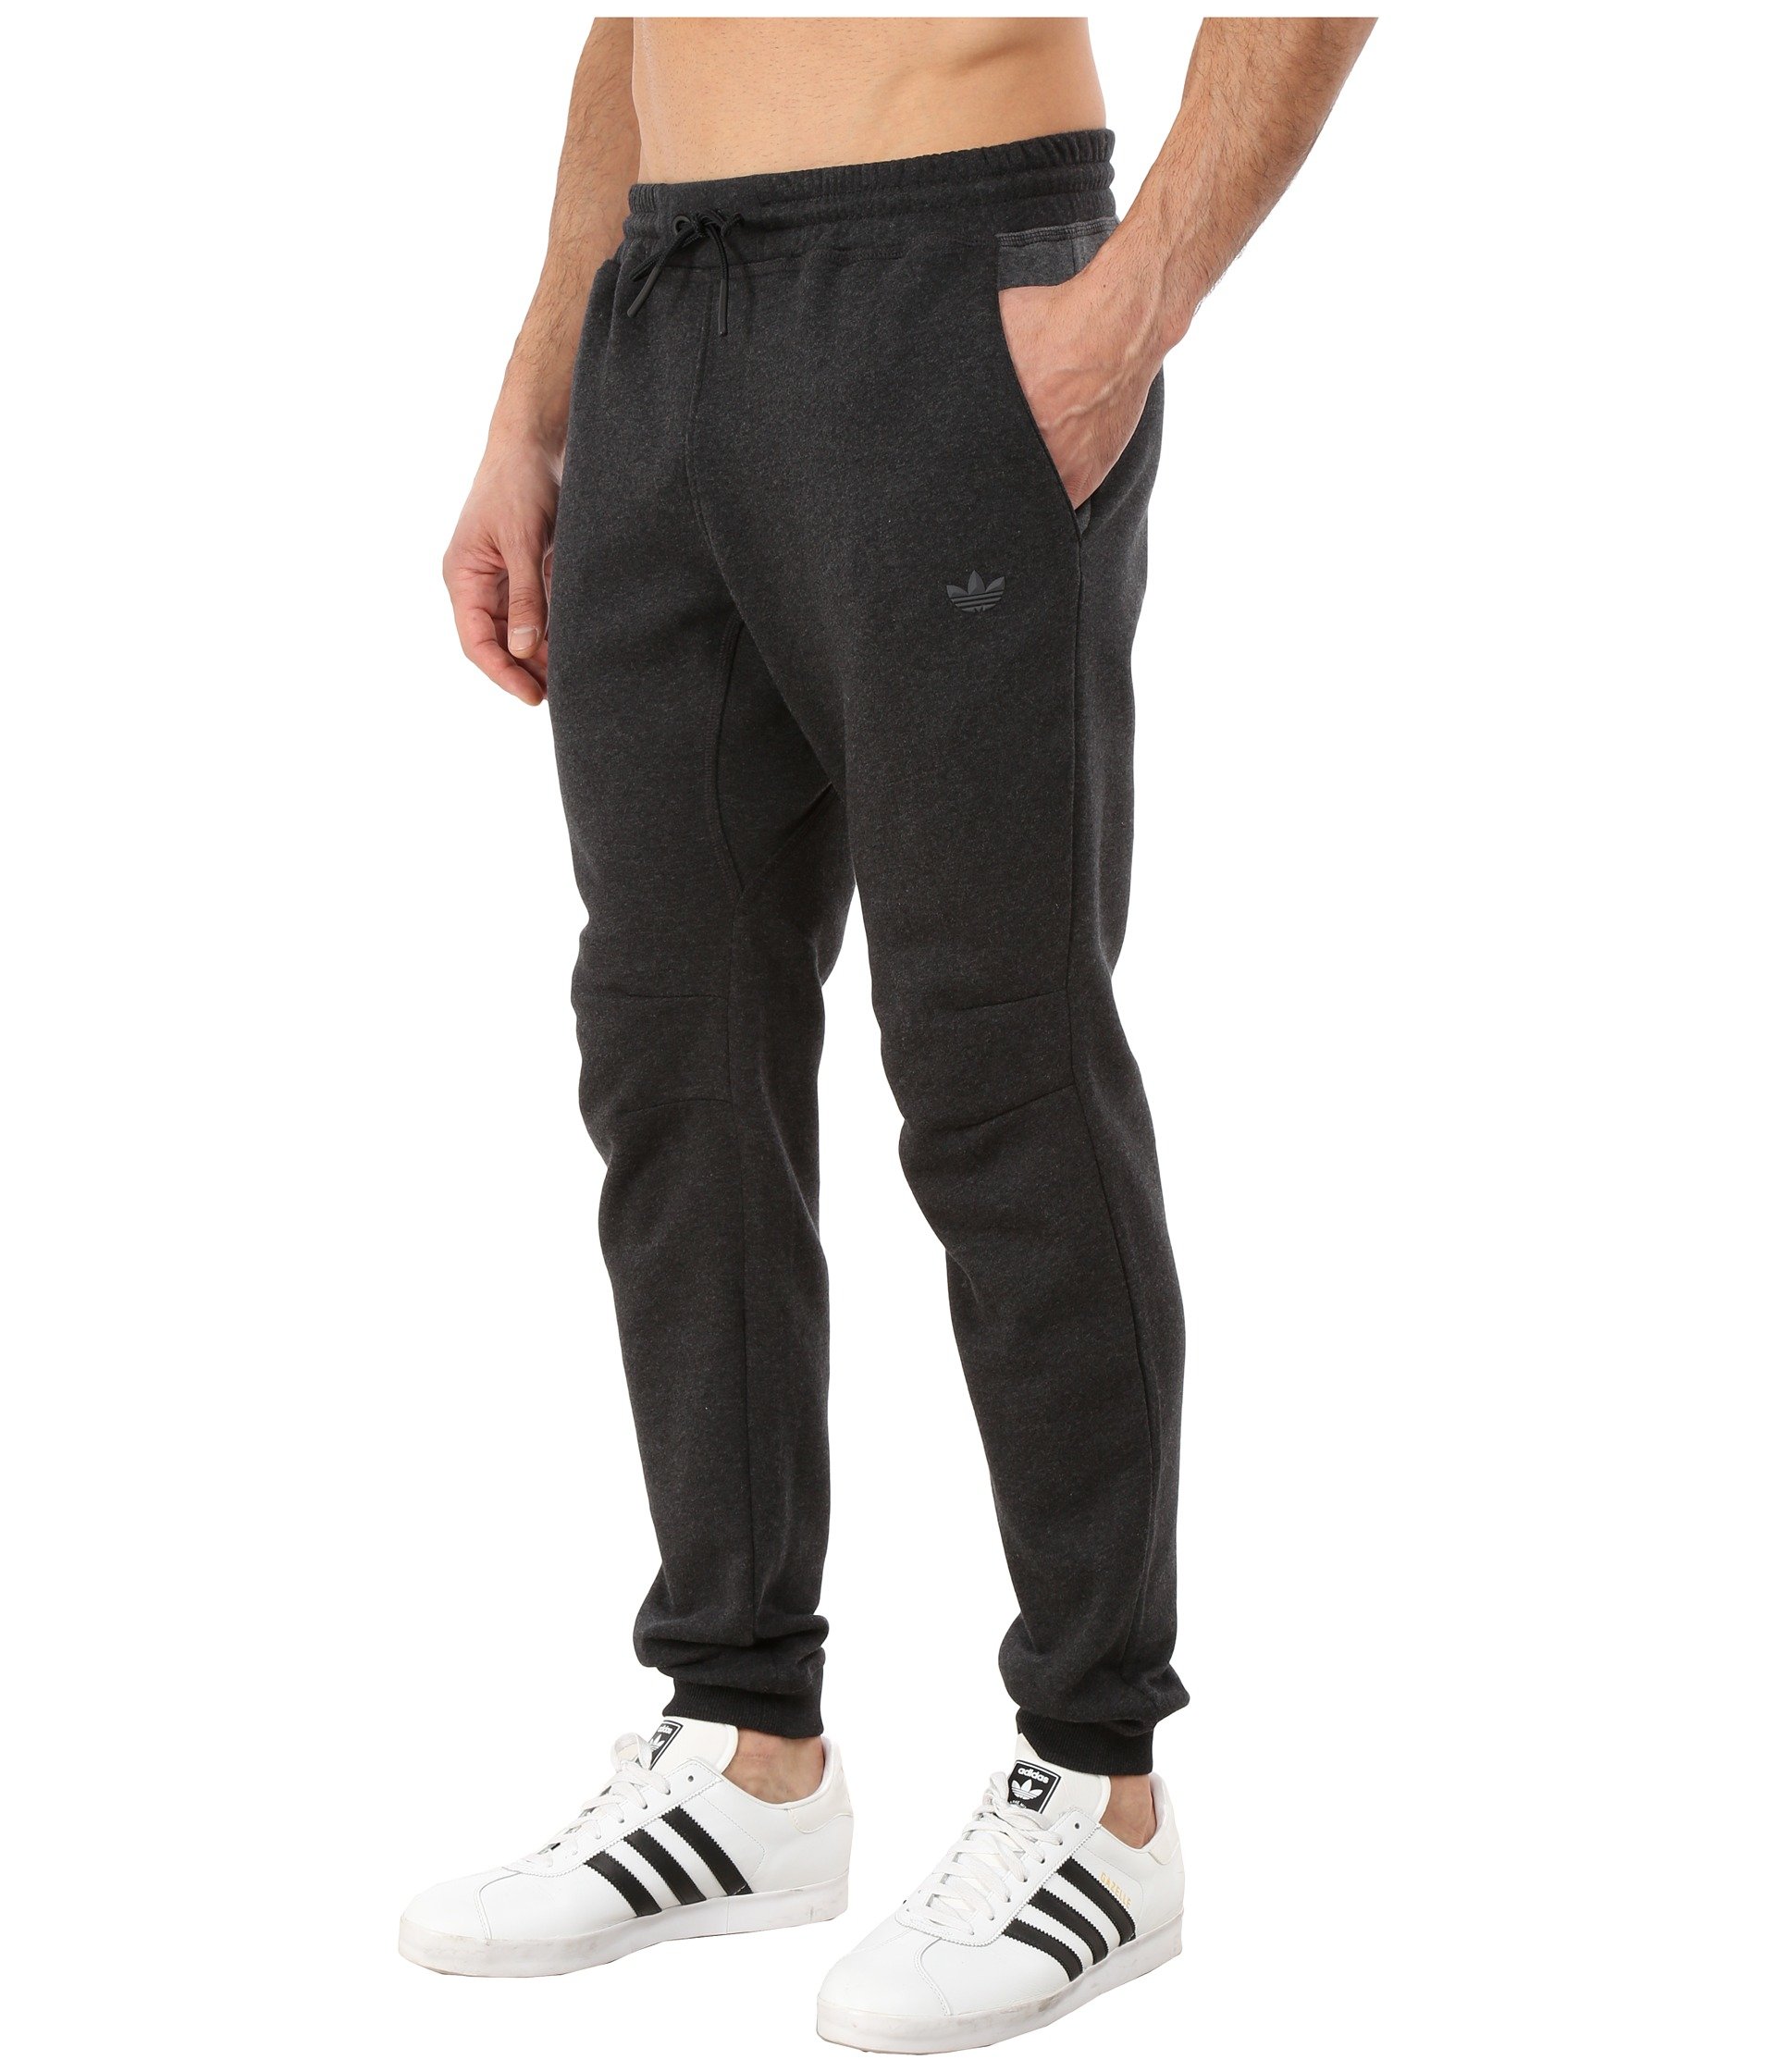 Lyst - Adidas originals Sport Luxe Cuff Fleece Pant in Black for Men